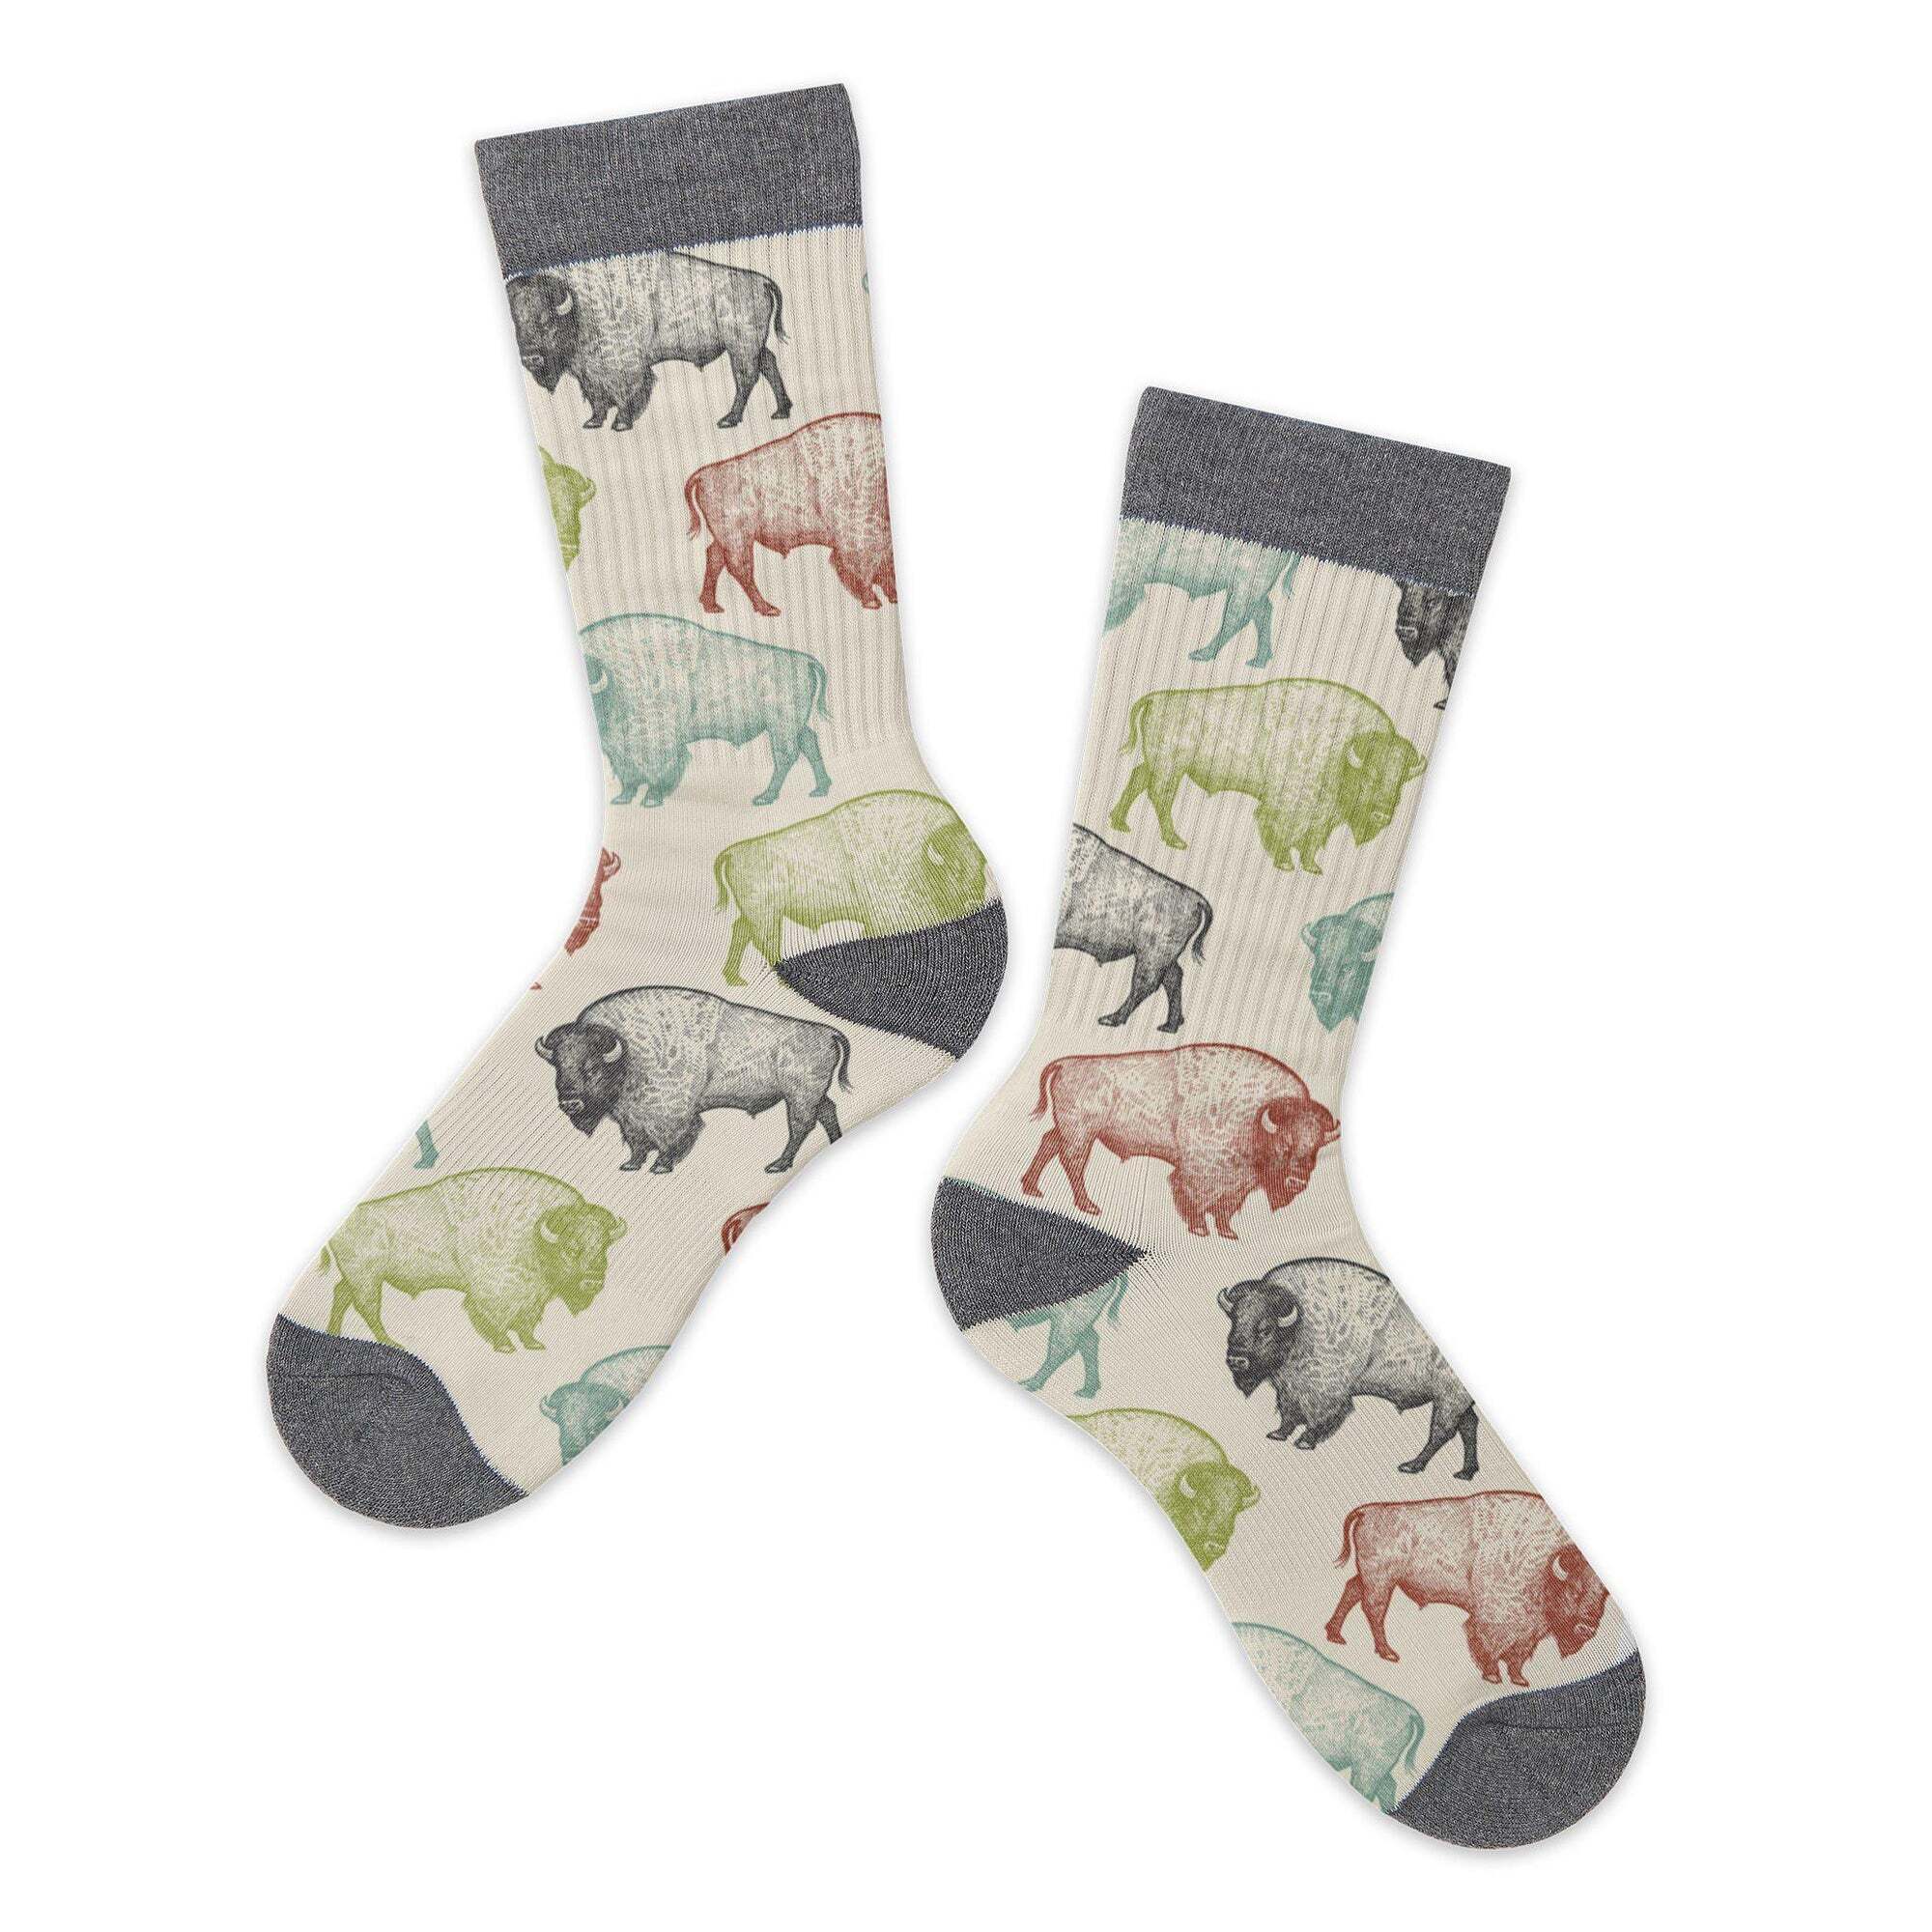 Socks - Multi-Colored Bison